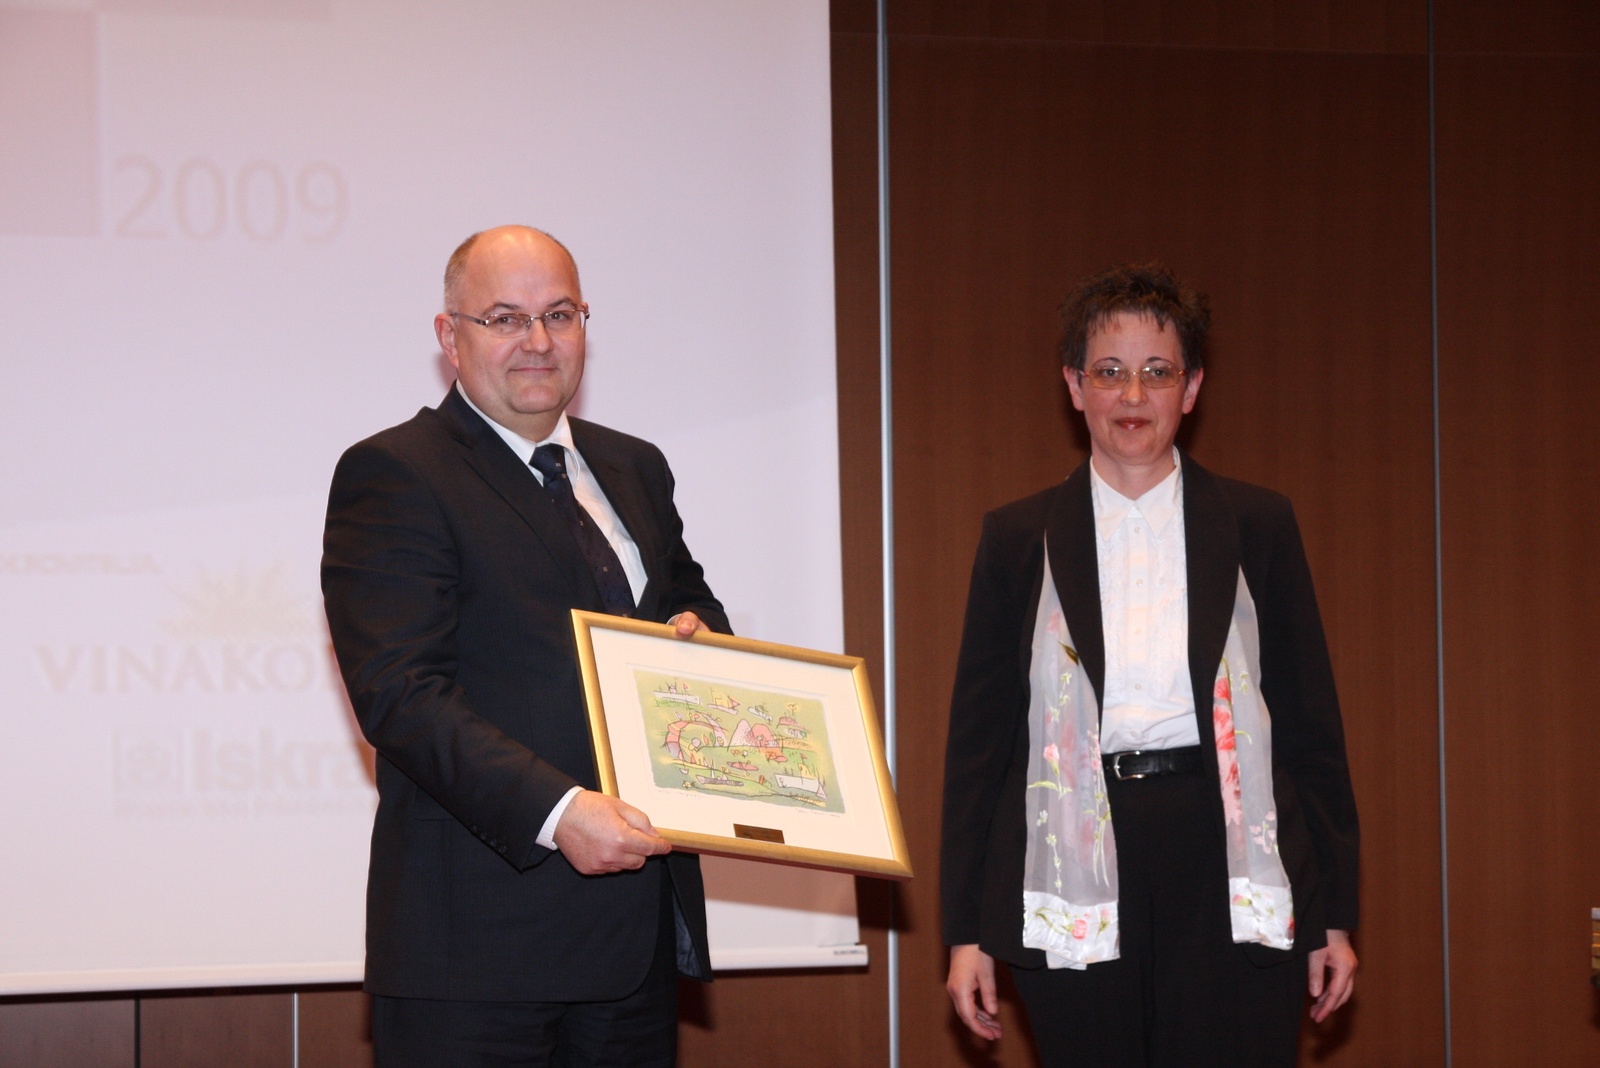 "Primorska prize for technology transfer" was awarded to the vice-president of the University of Nova Gorica